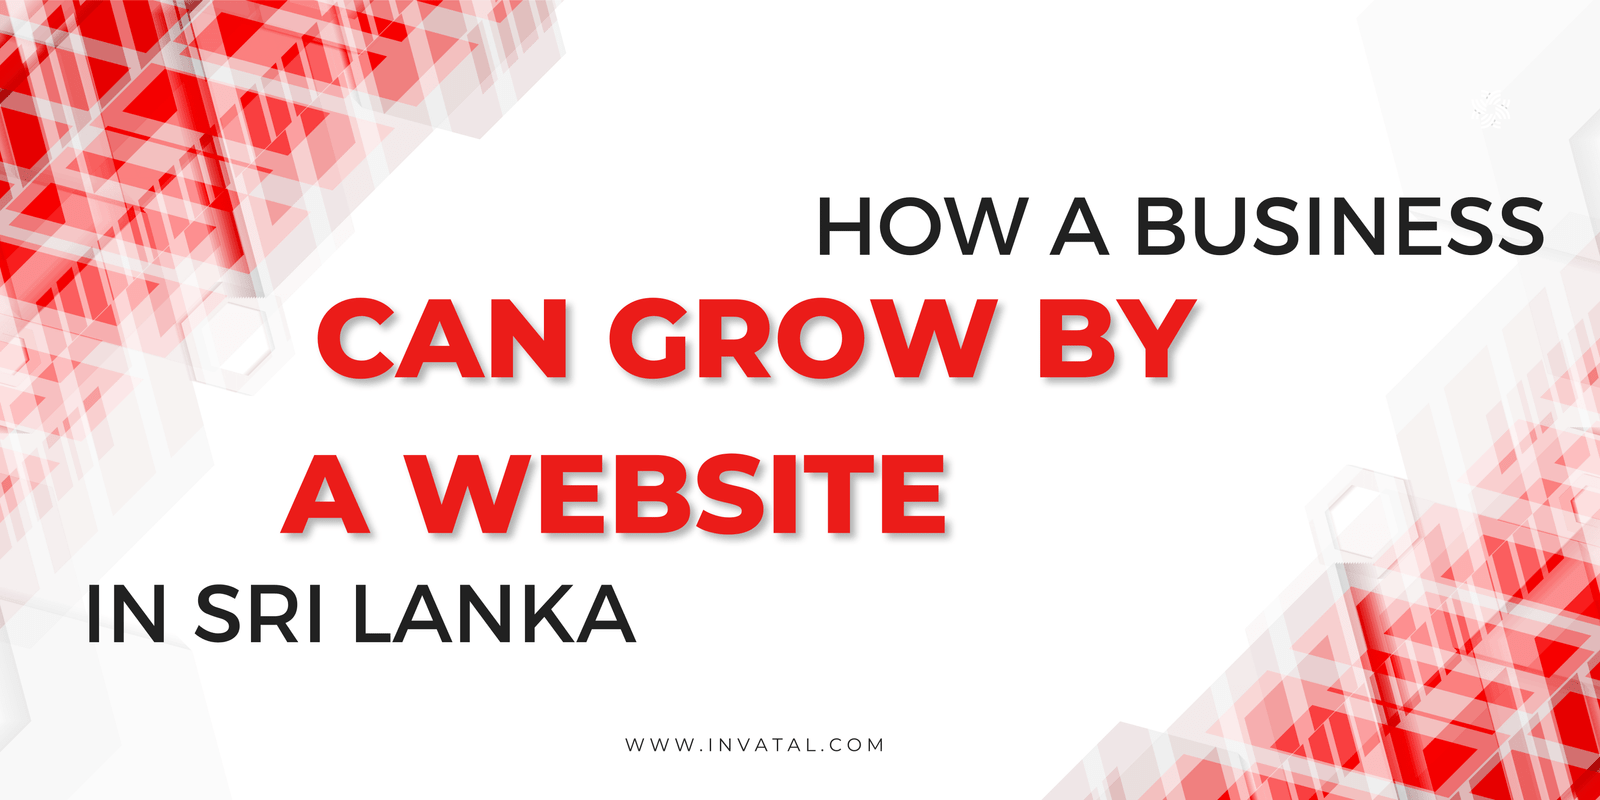 HOW A BUSINESS CAN GROW THROUGH A WEBSITE IN SRI LANKA